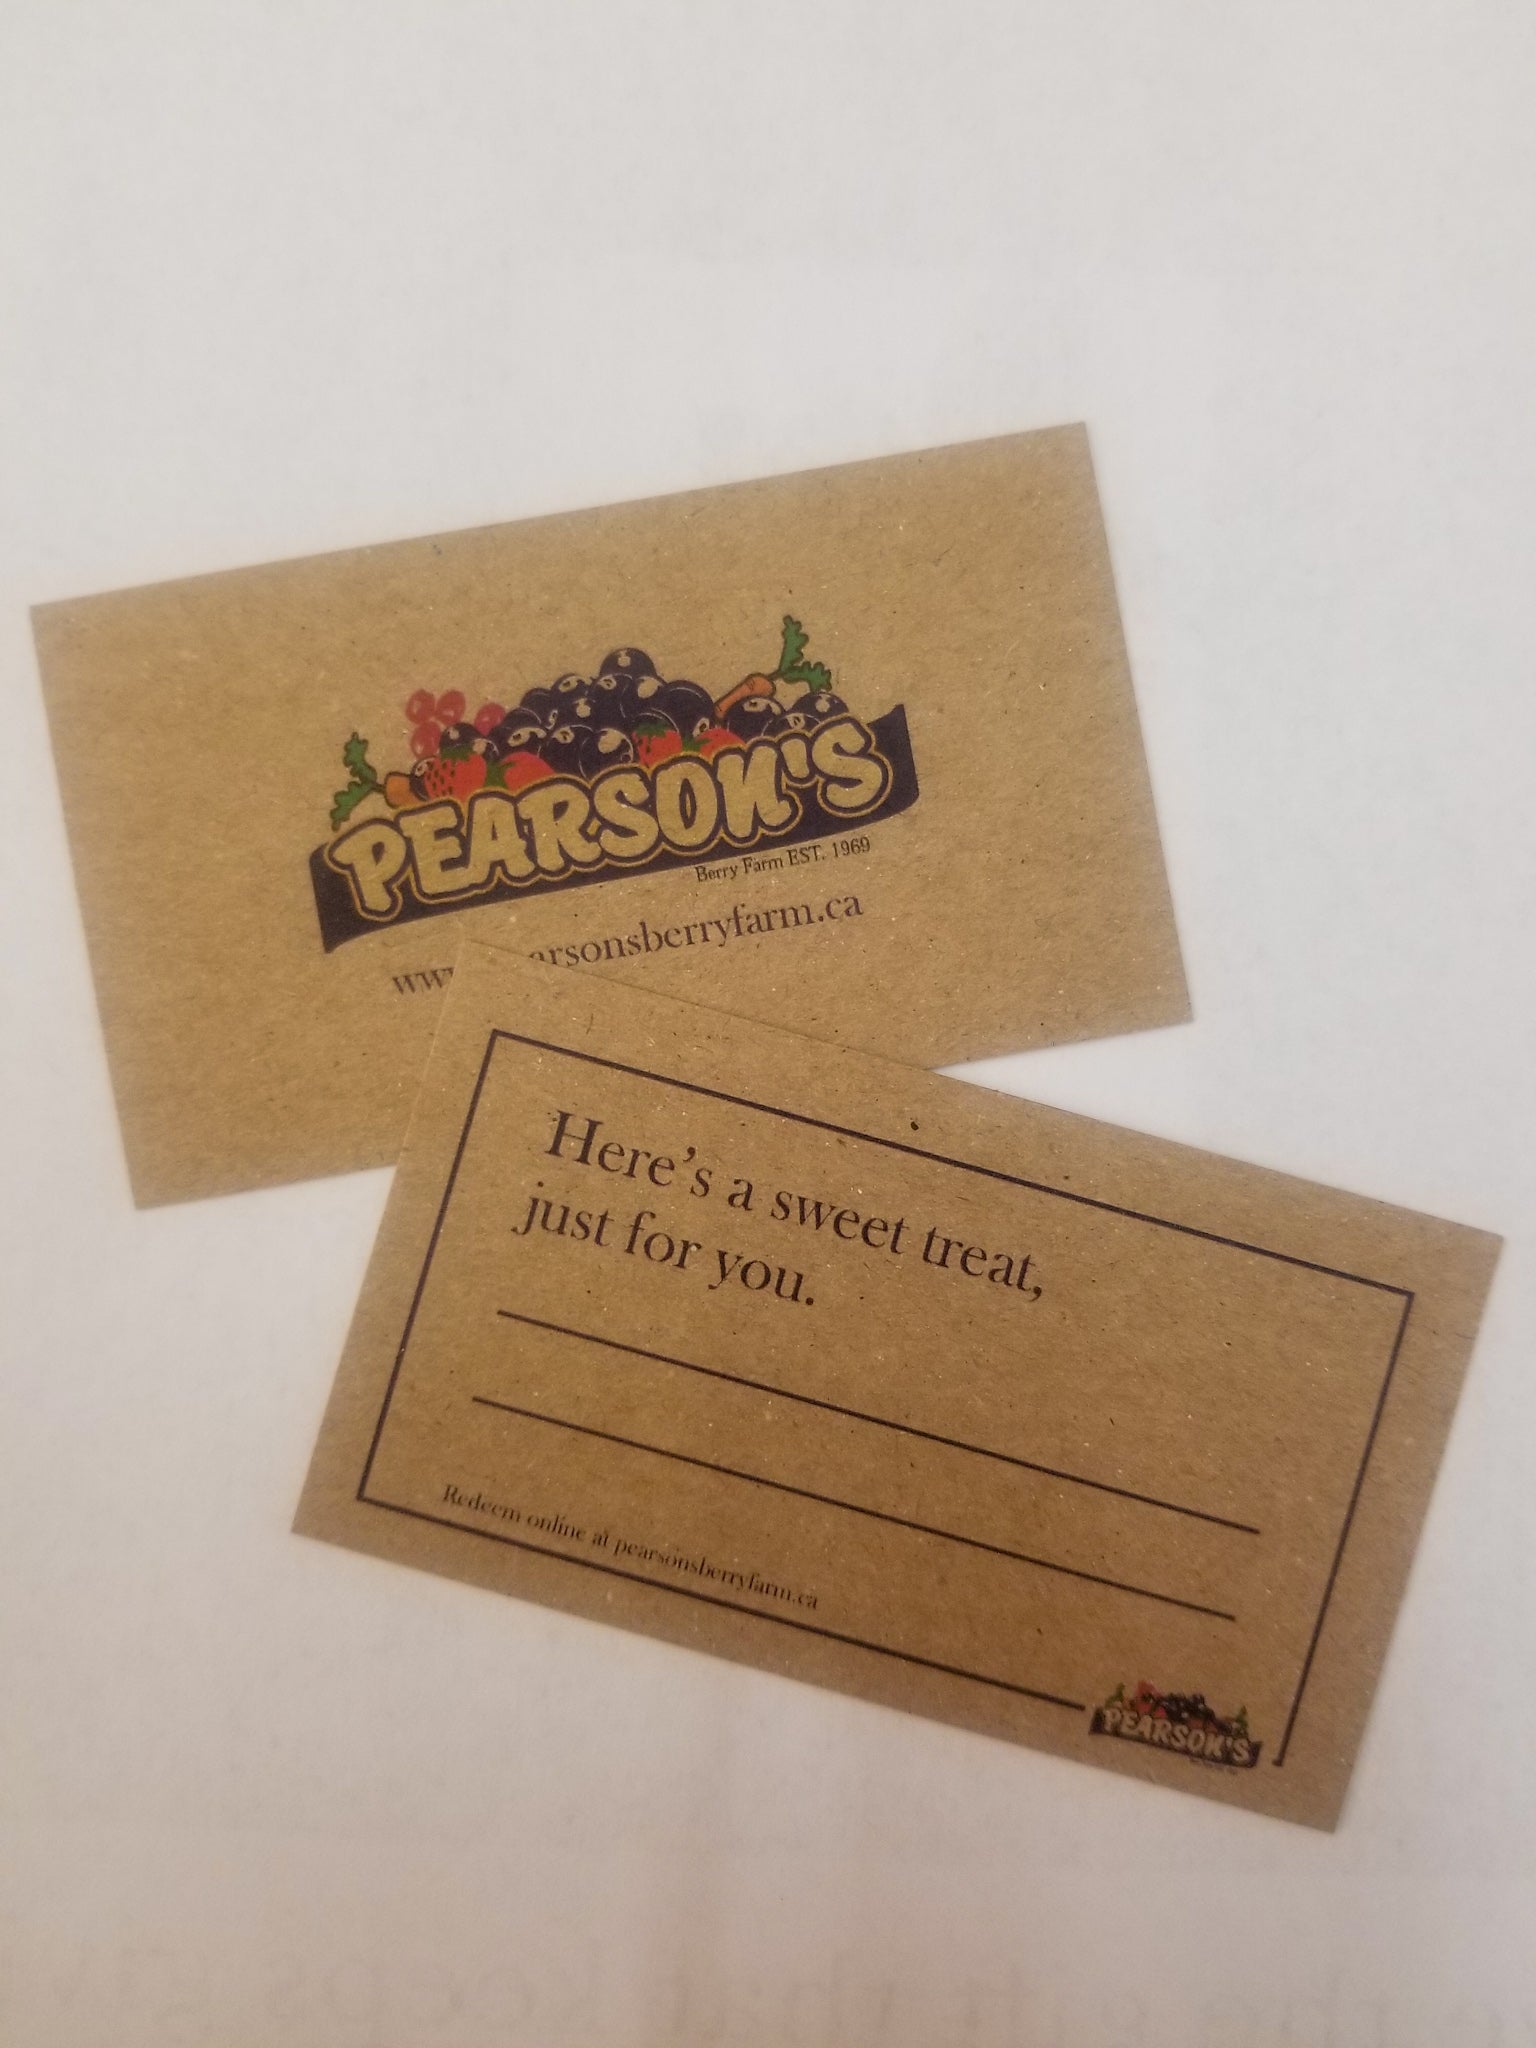 Pearson's Gift Card